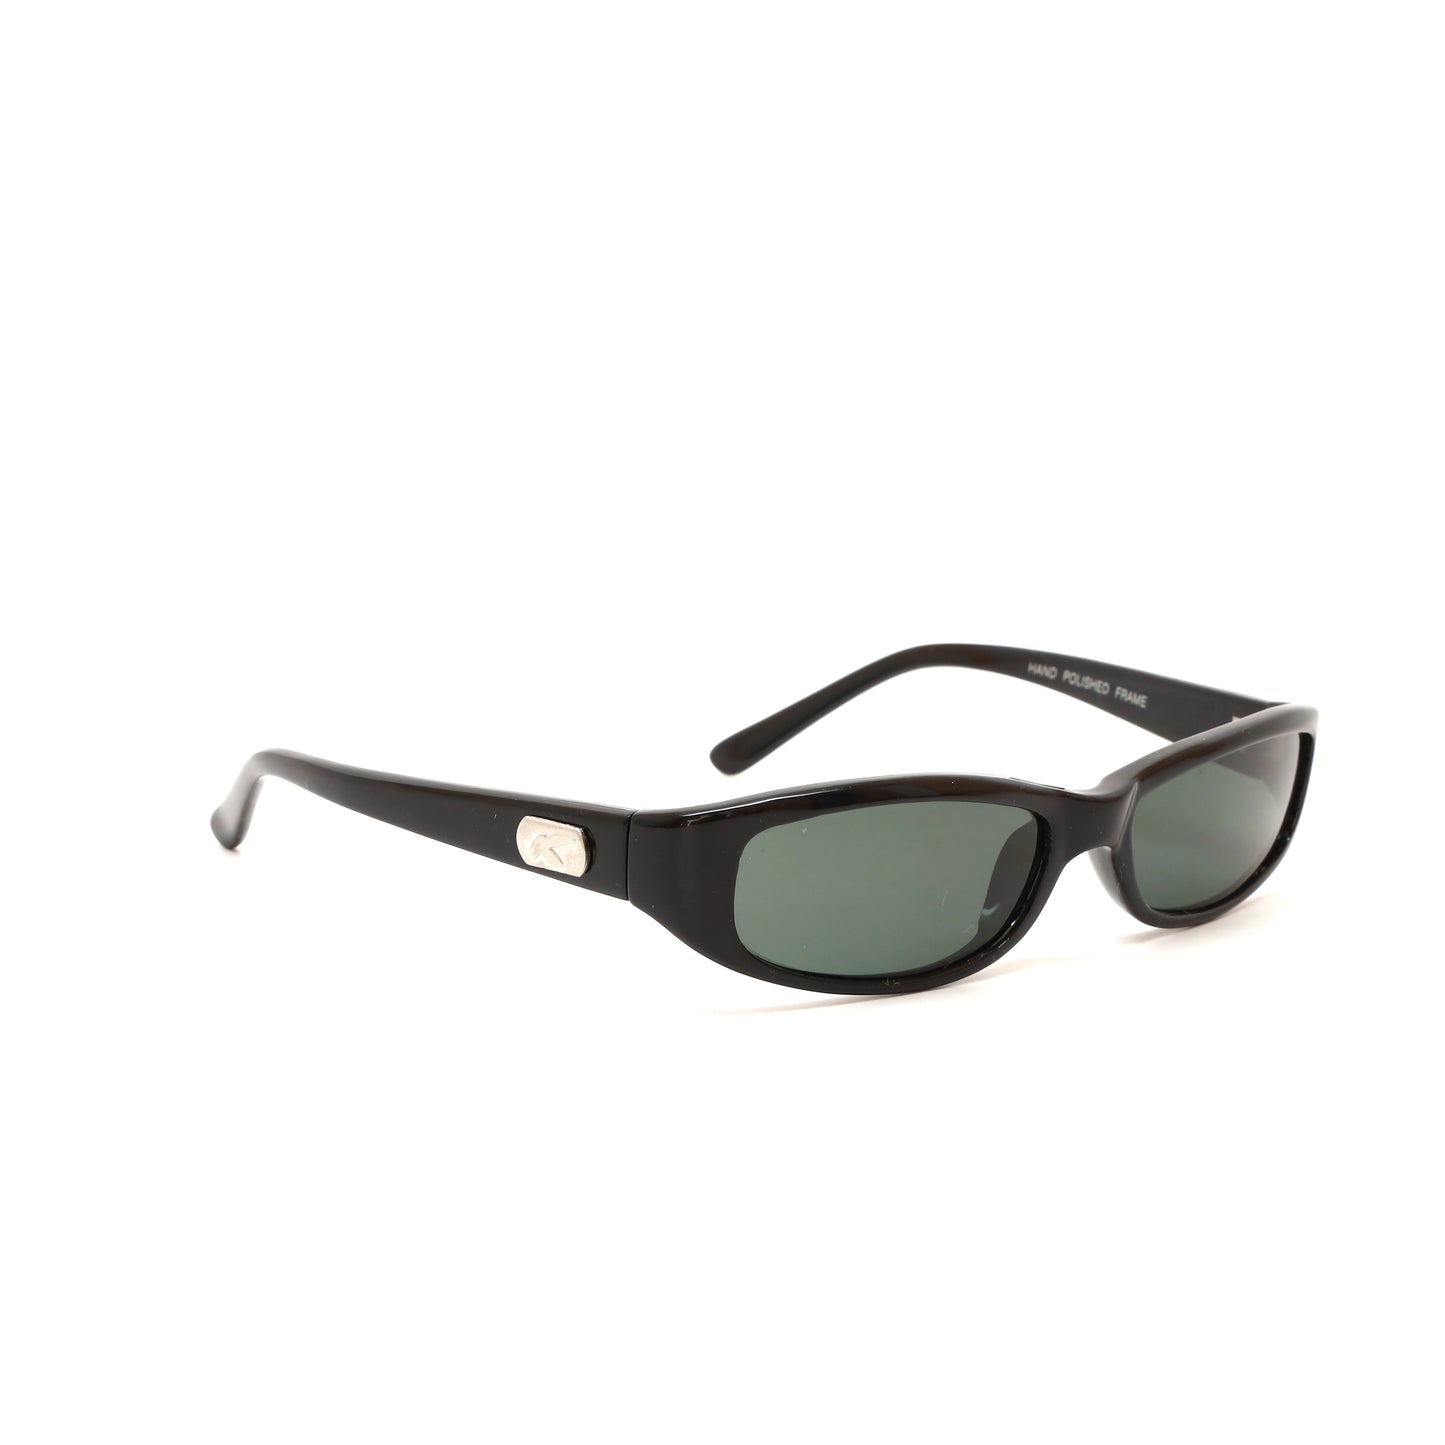 Vintage Small Size 90s Dez Narrow Shaped Sunglasses - Black